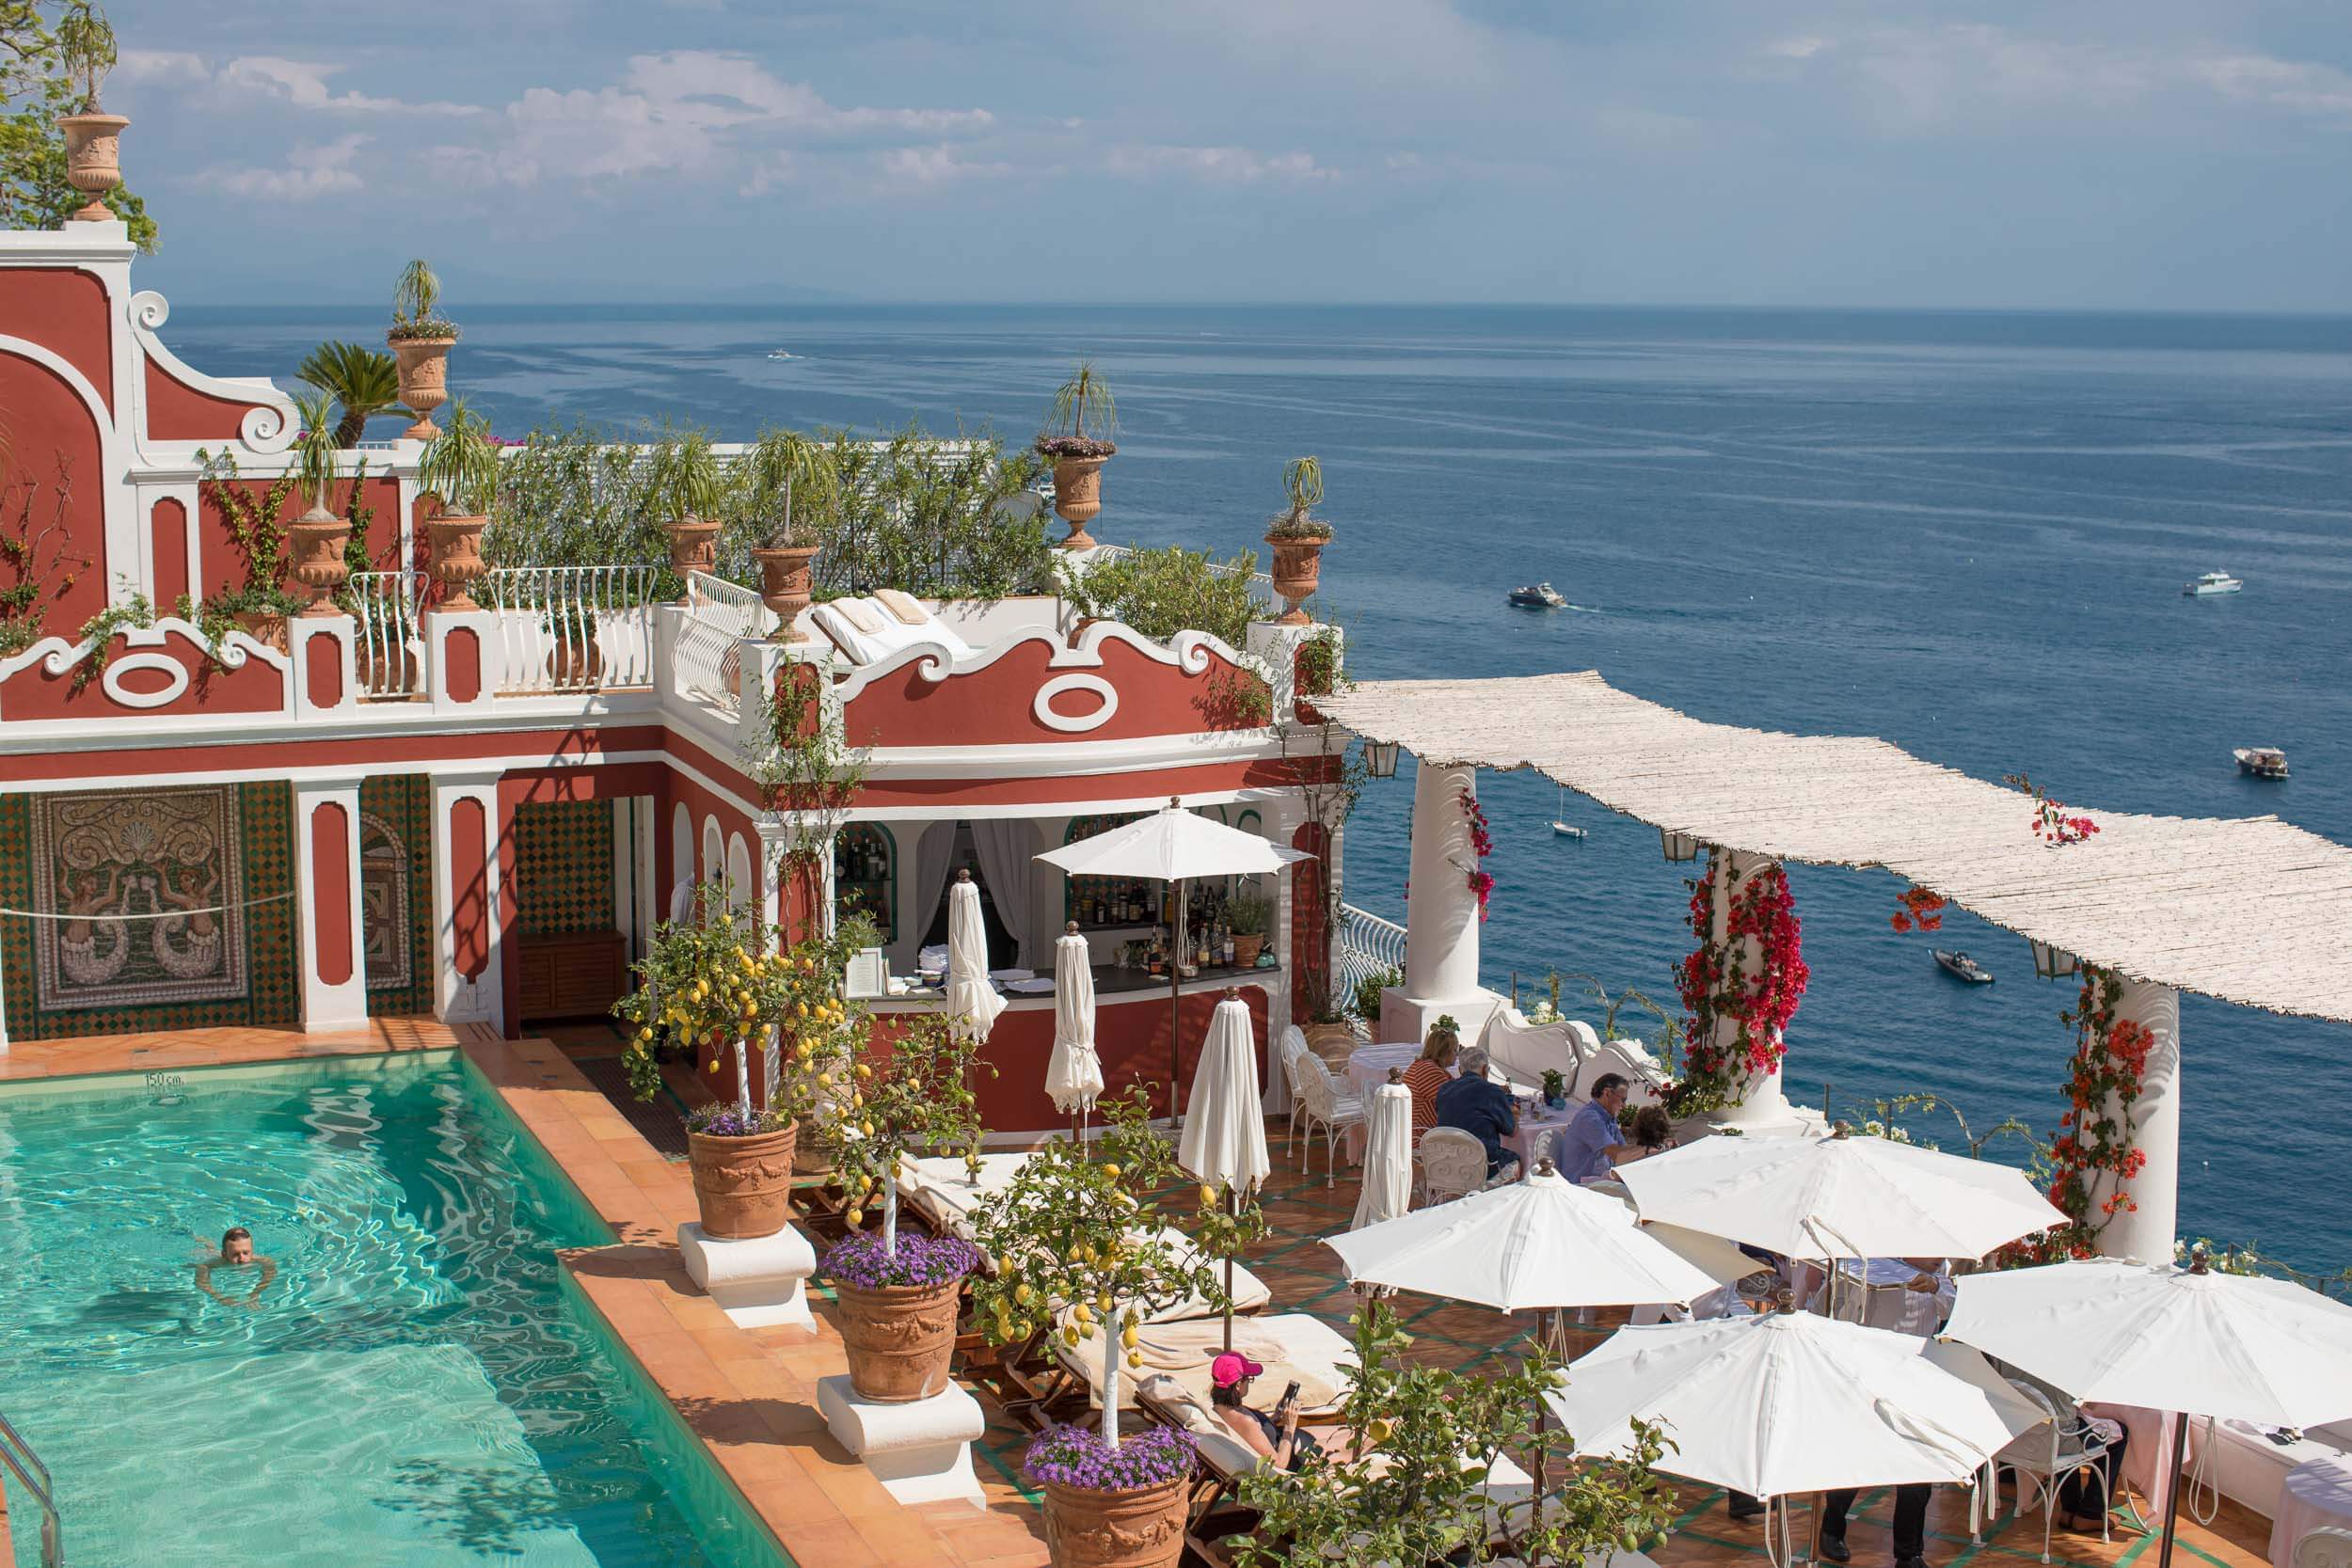 Positano hotels with pool - the beautiful Le Sirenuse